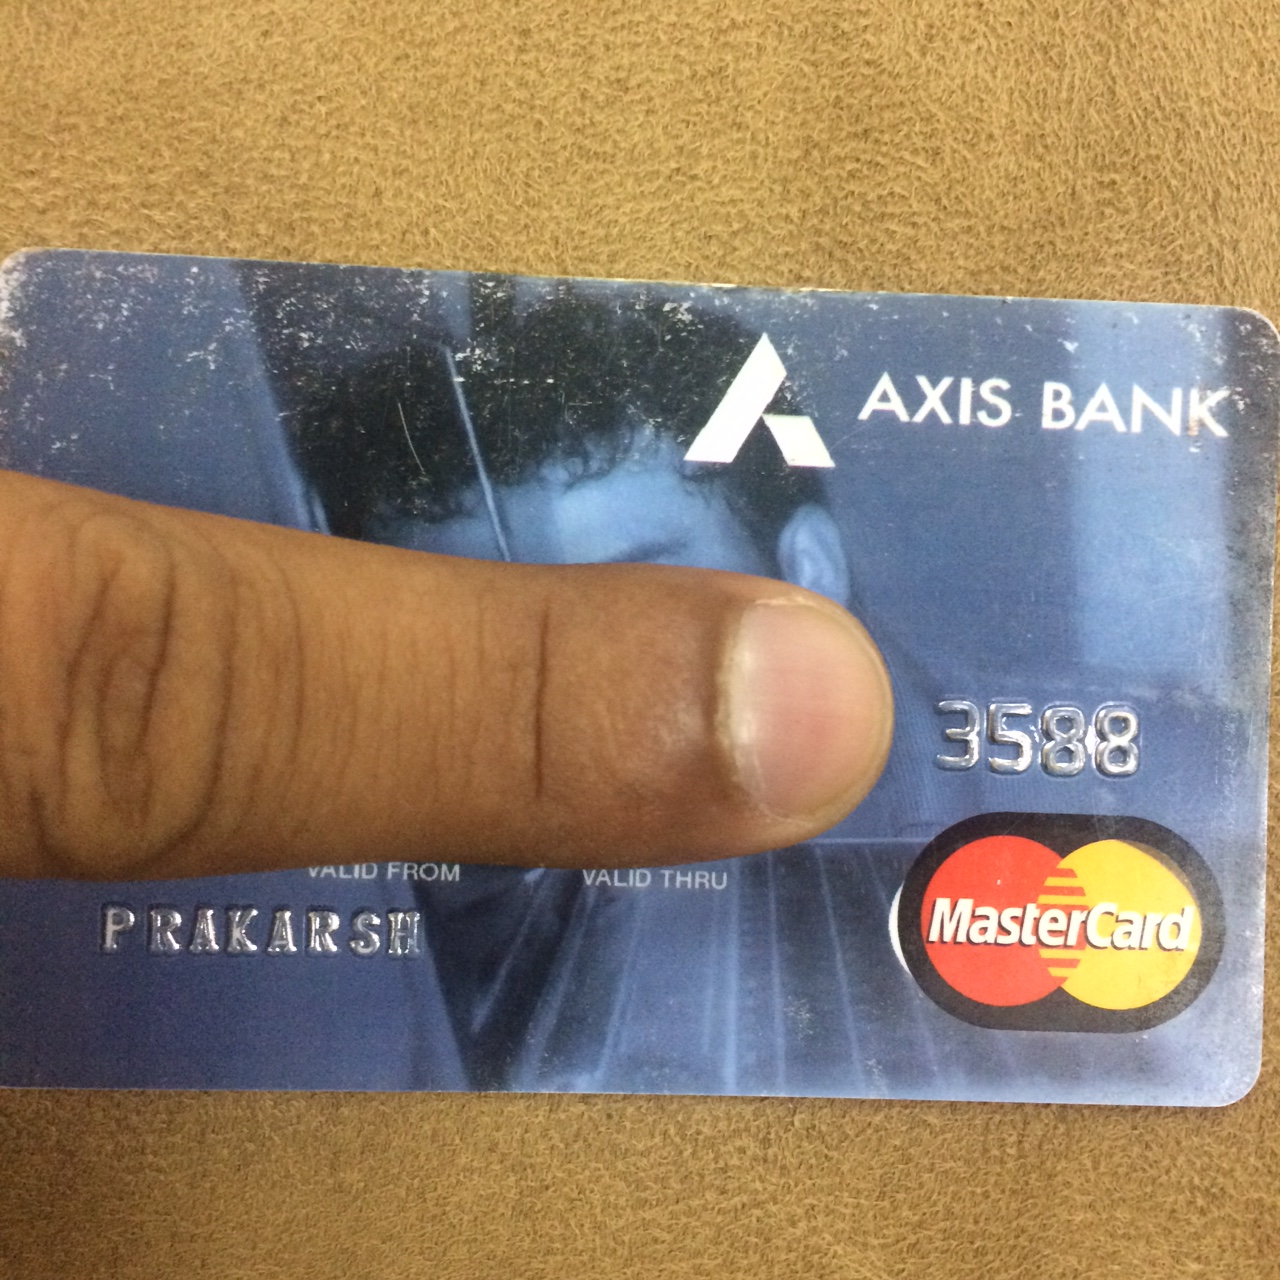 Onlyfans debit card not verified